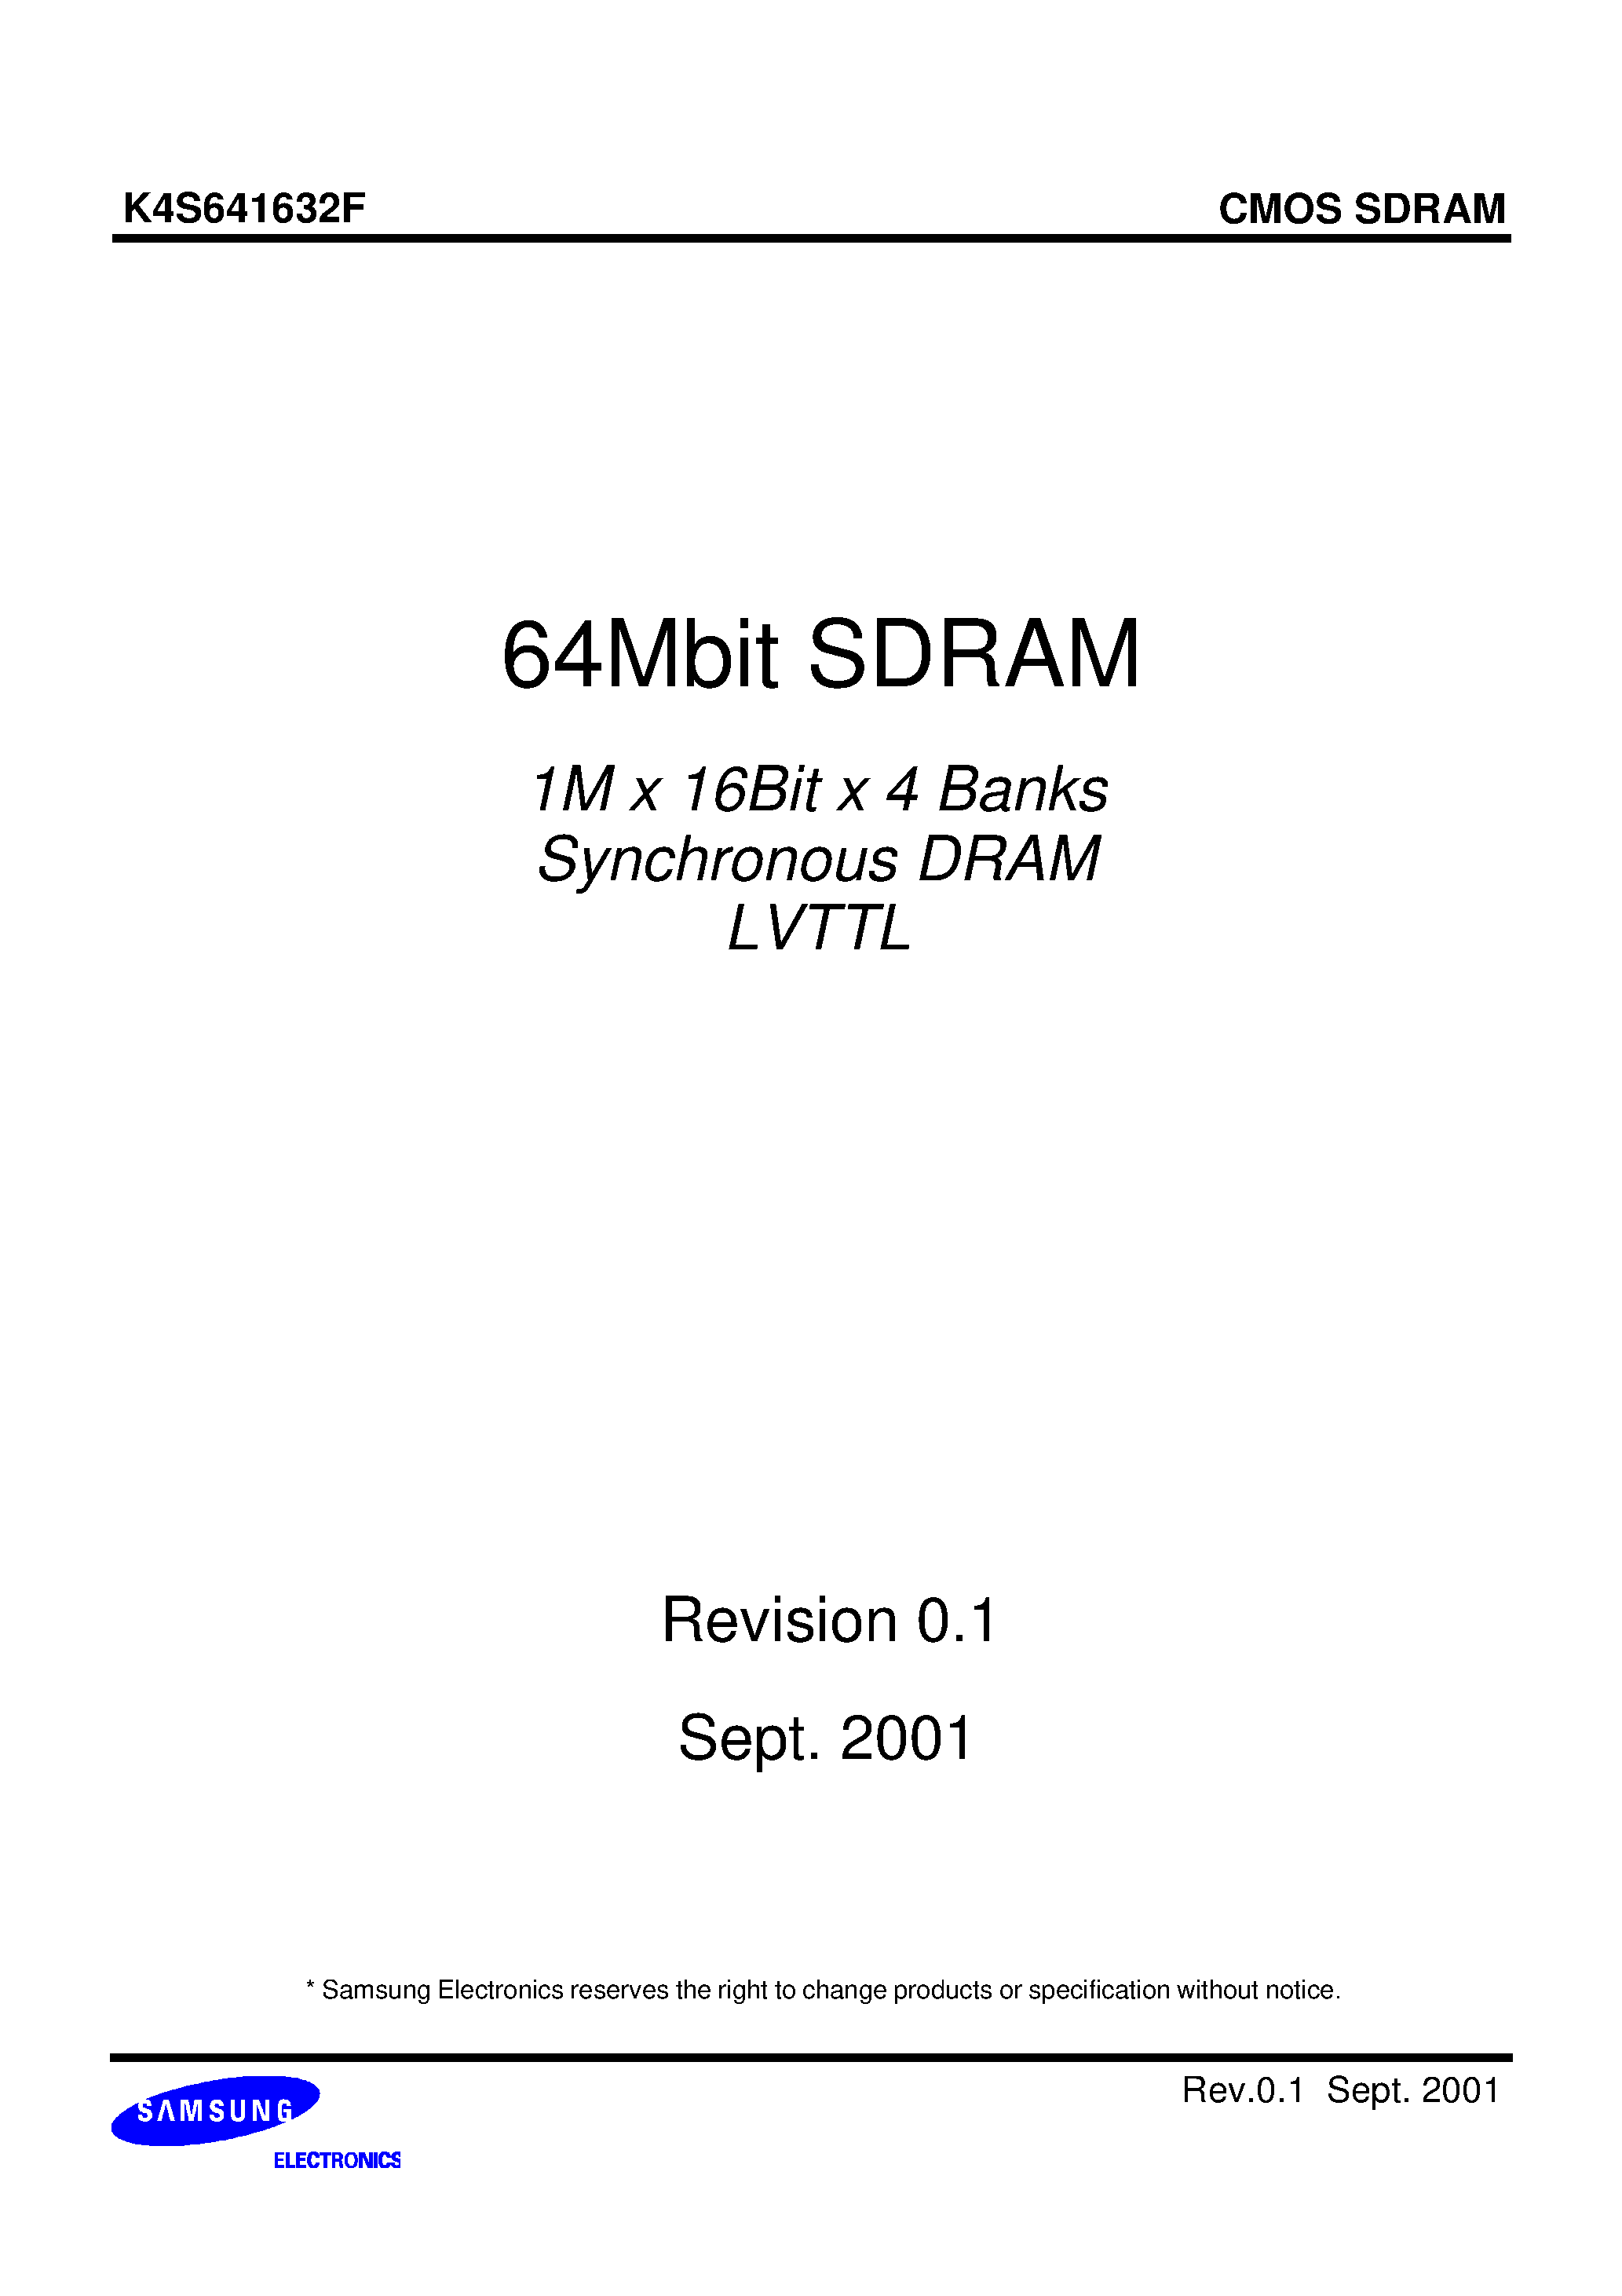 Datasheet K4S641632F-TL60 - 64Mbit SDRAM 1M x 16Bit x 4 Banks Synchronous DRAM LVTTL page 1